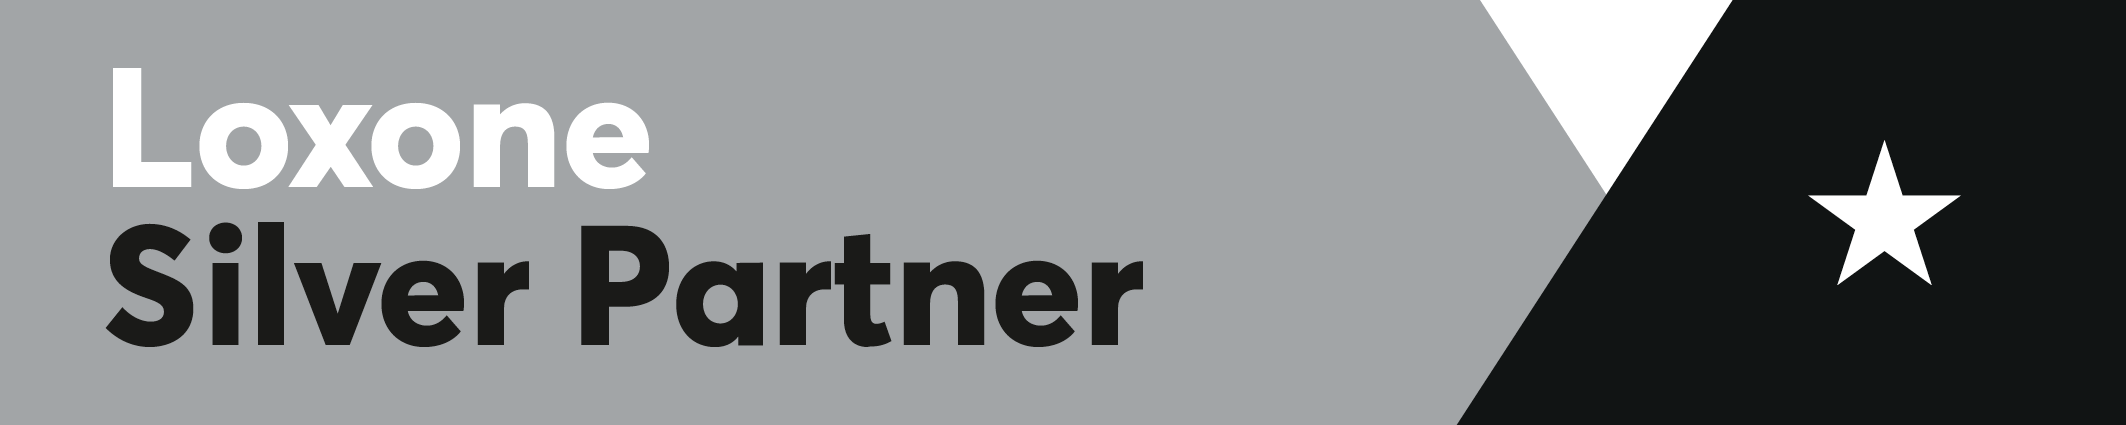 SMARTBUILDING - SMARTHOME | Loxone Silver Partner Logo